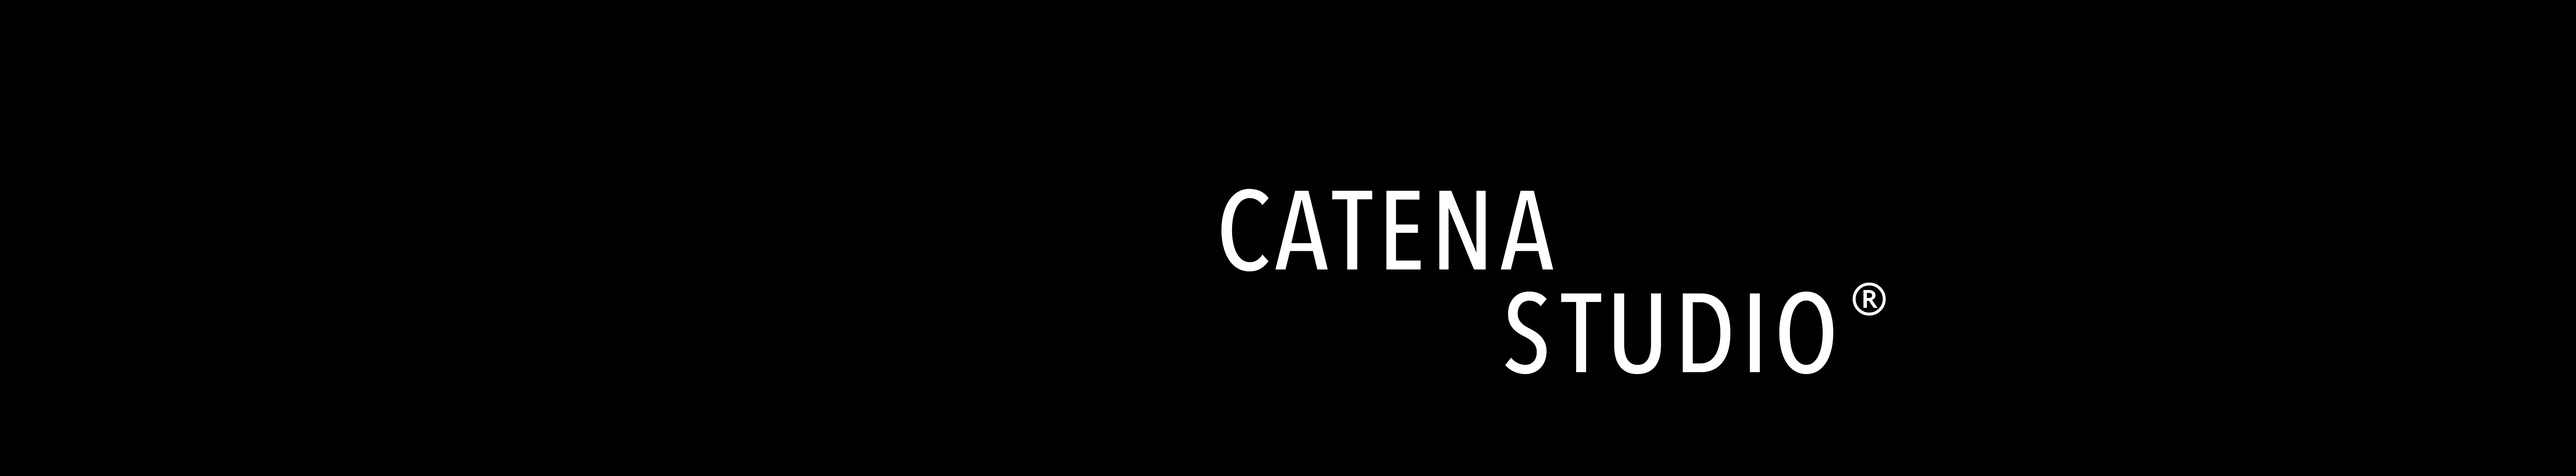 Catena Studio profil başlığı